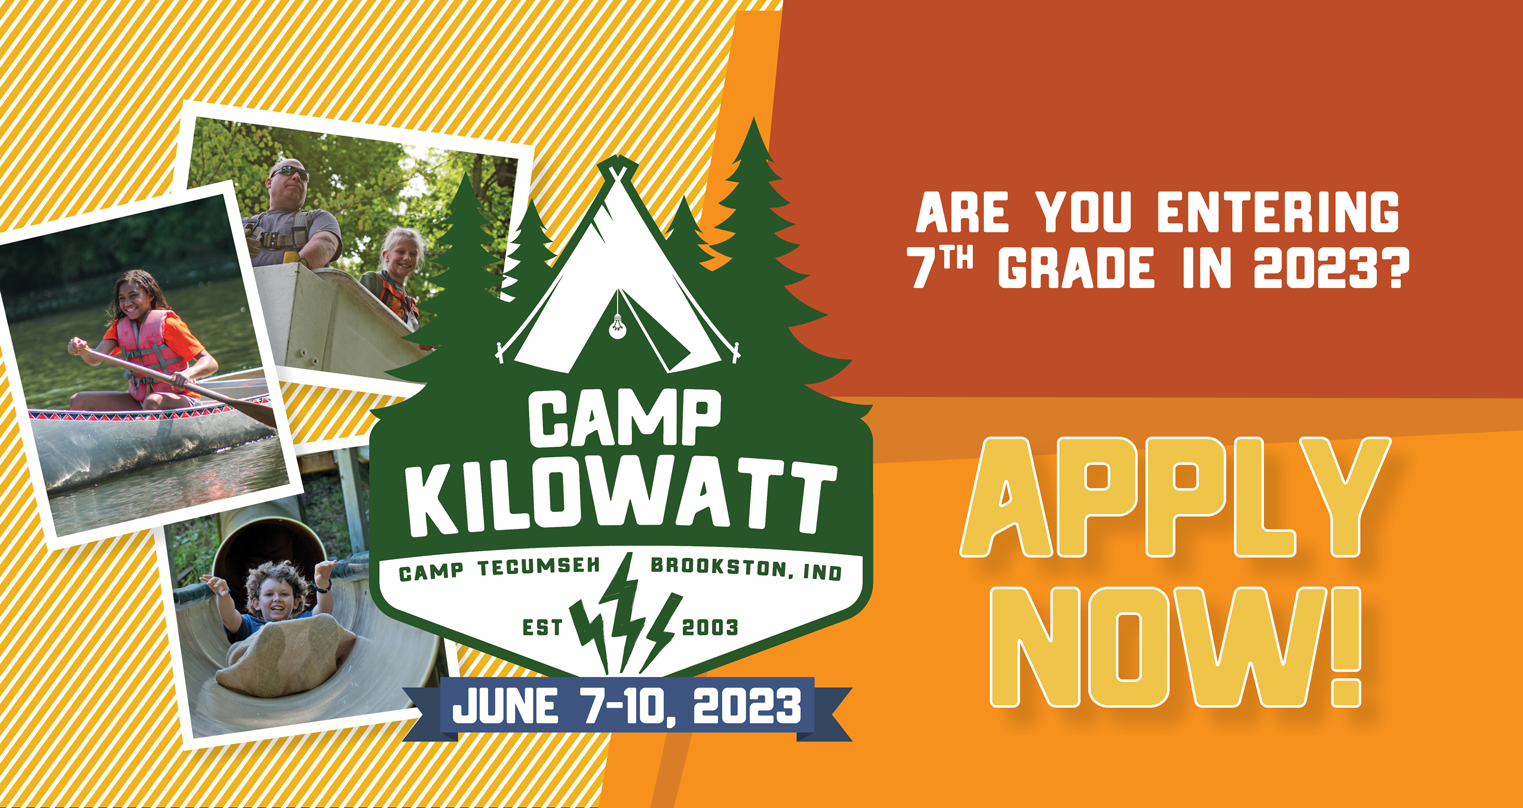 Camp Kilowatt